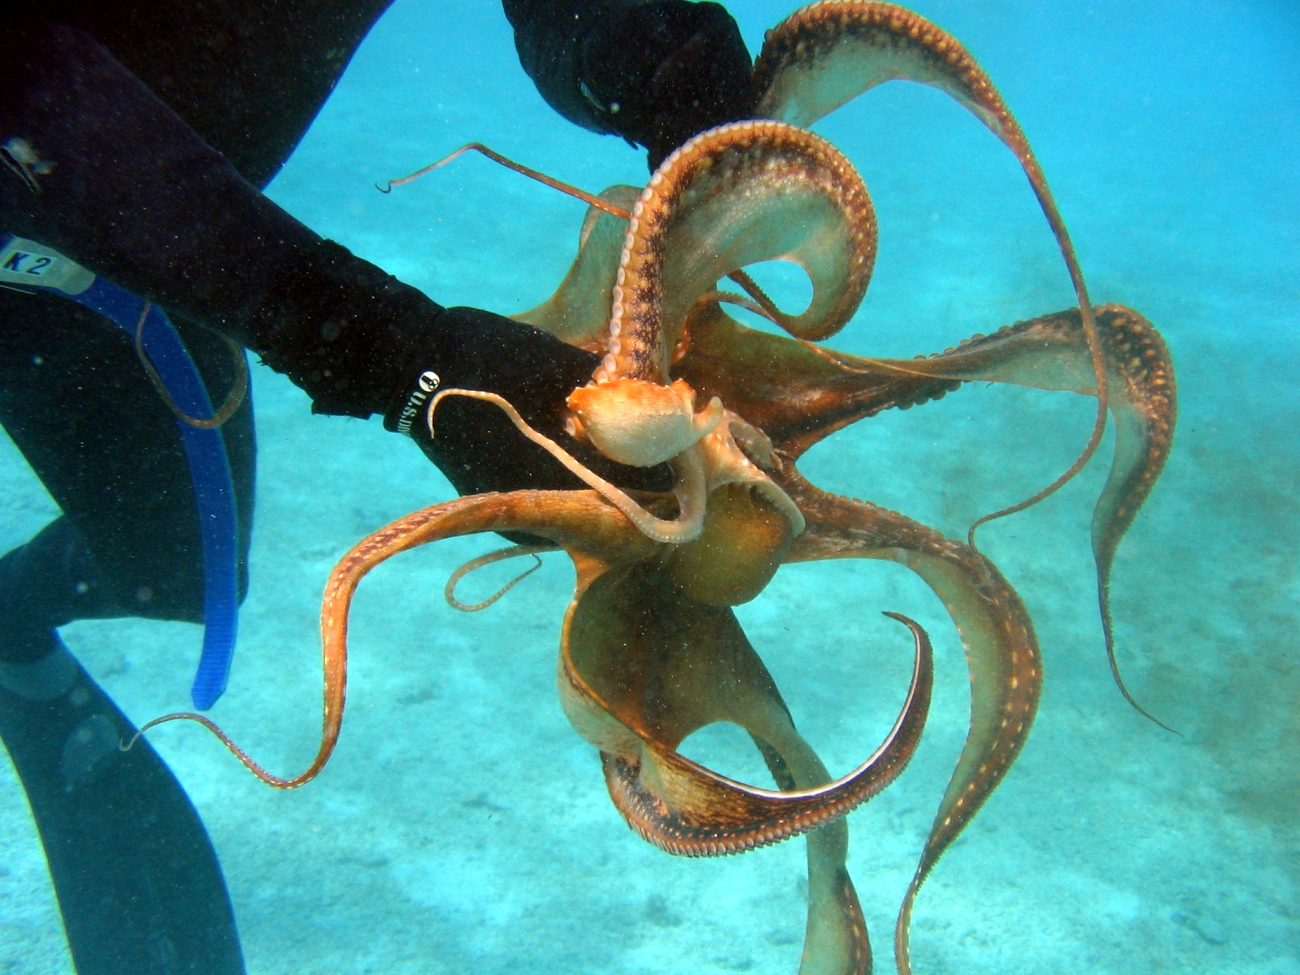 An ornate octopus (Octopus ornatus)